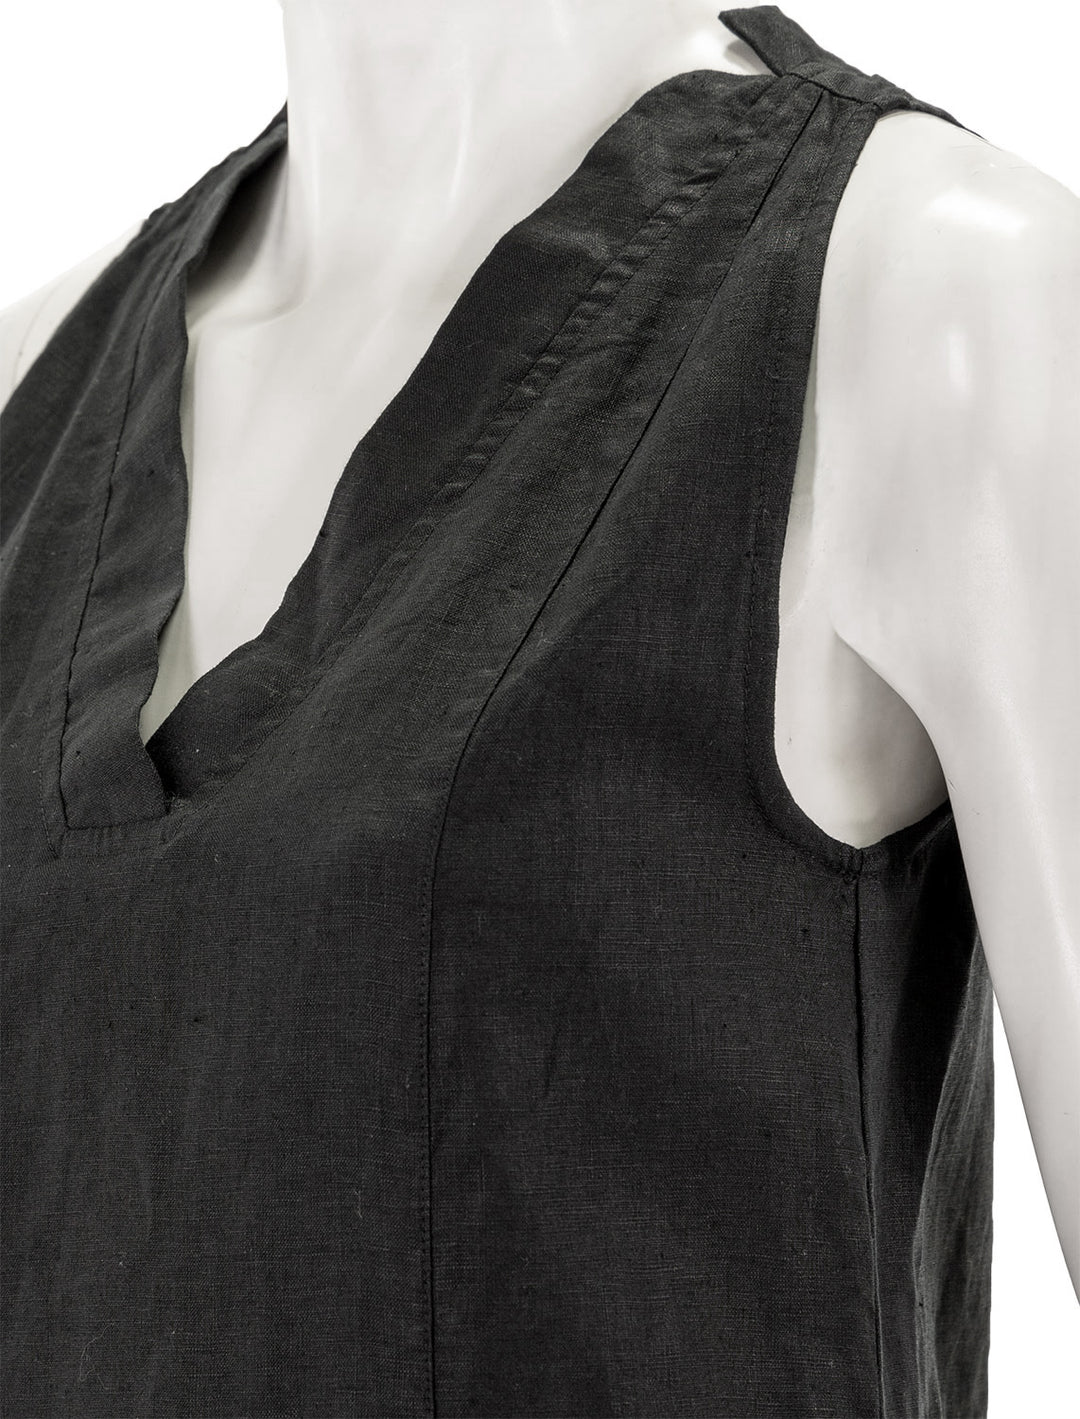 Close-up view of Splendid's nolan dress in black.